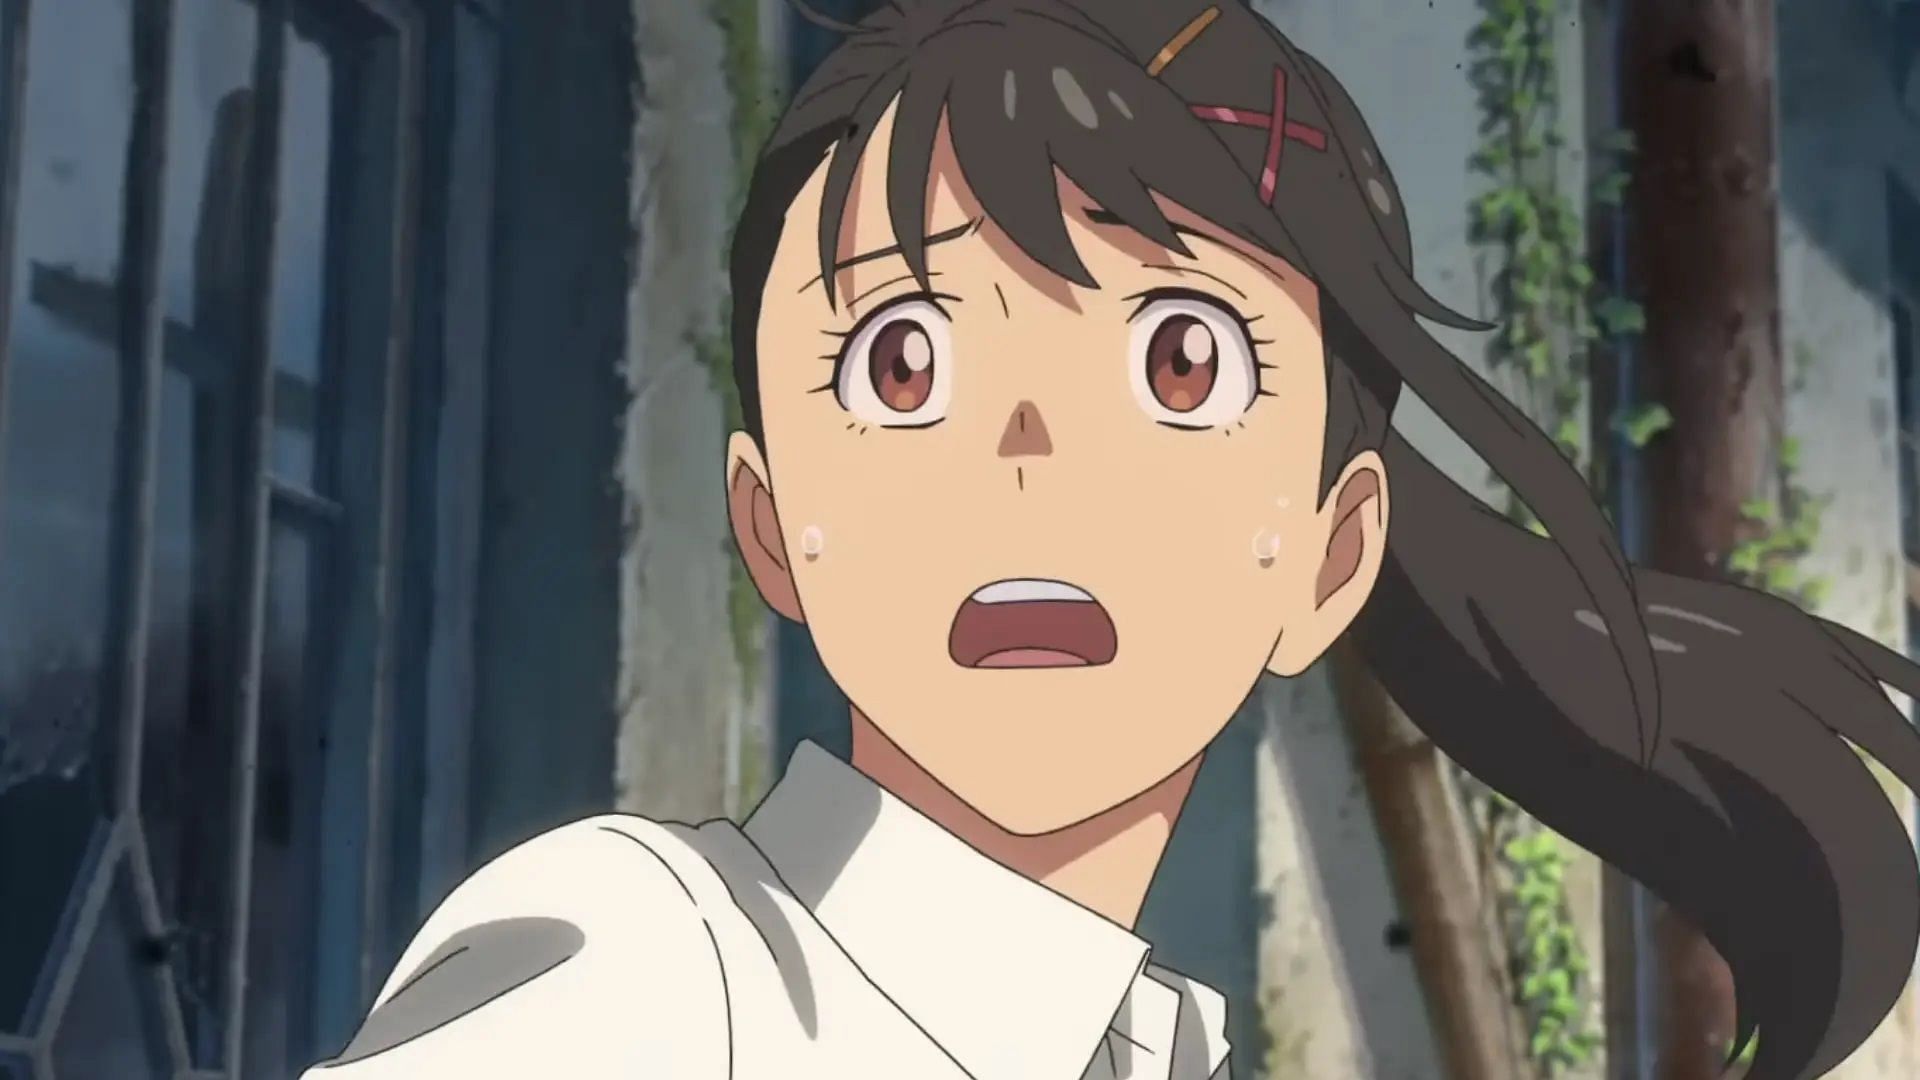 Japanese film 'Suzume' at PVR: An evening with anime master Makoto Shinkai